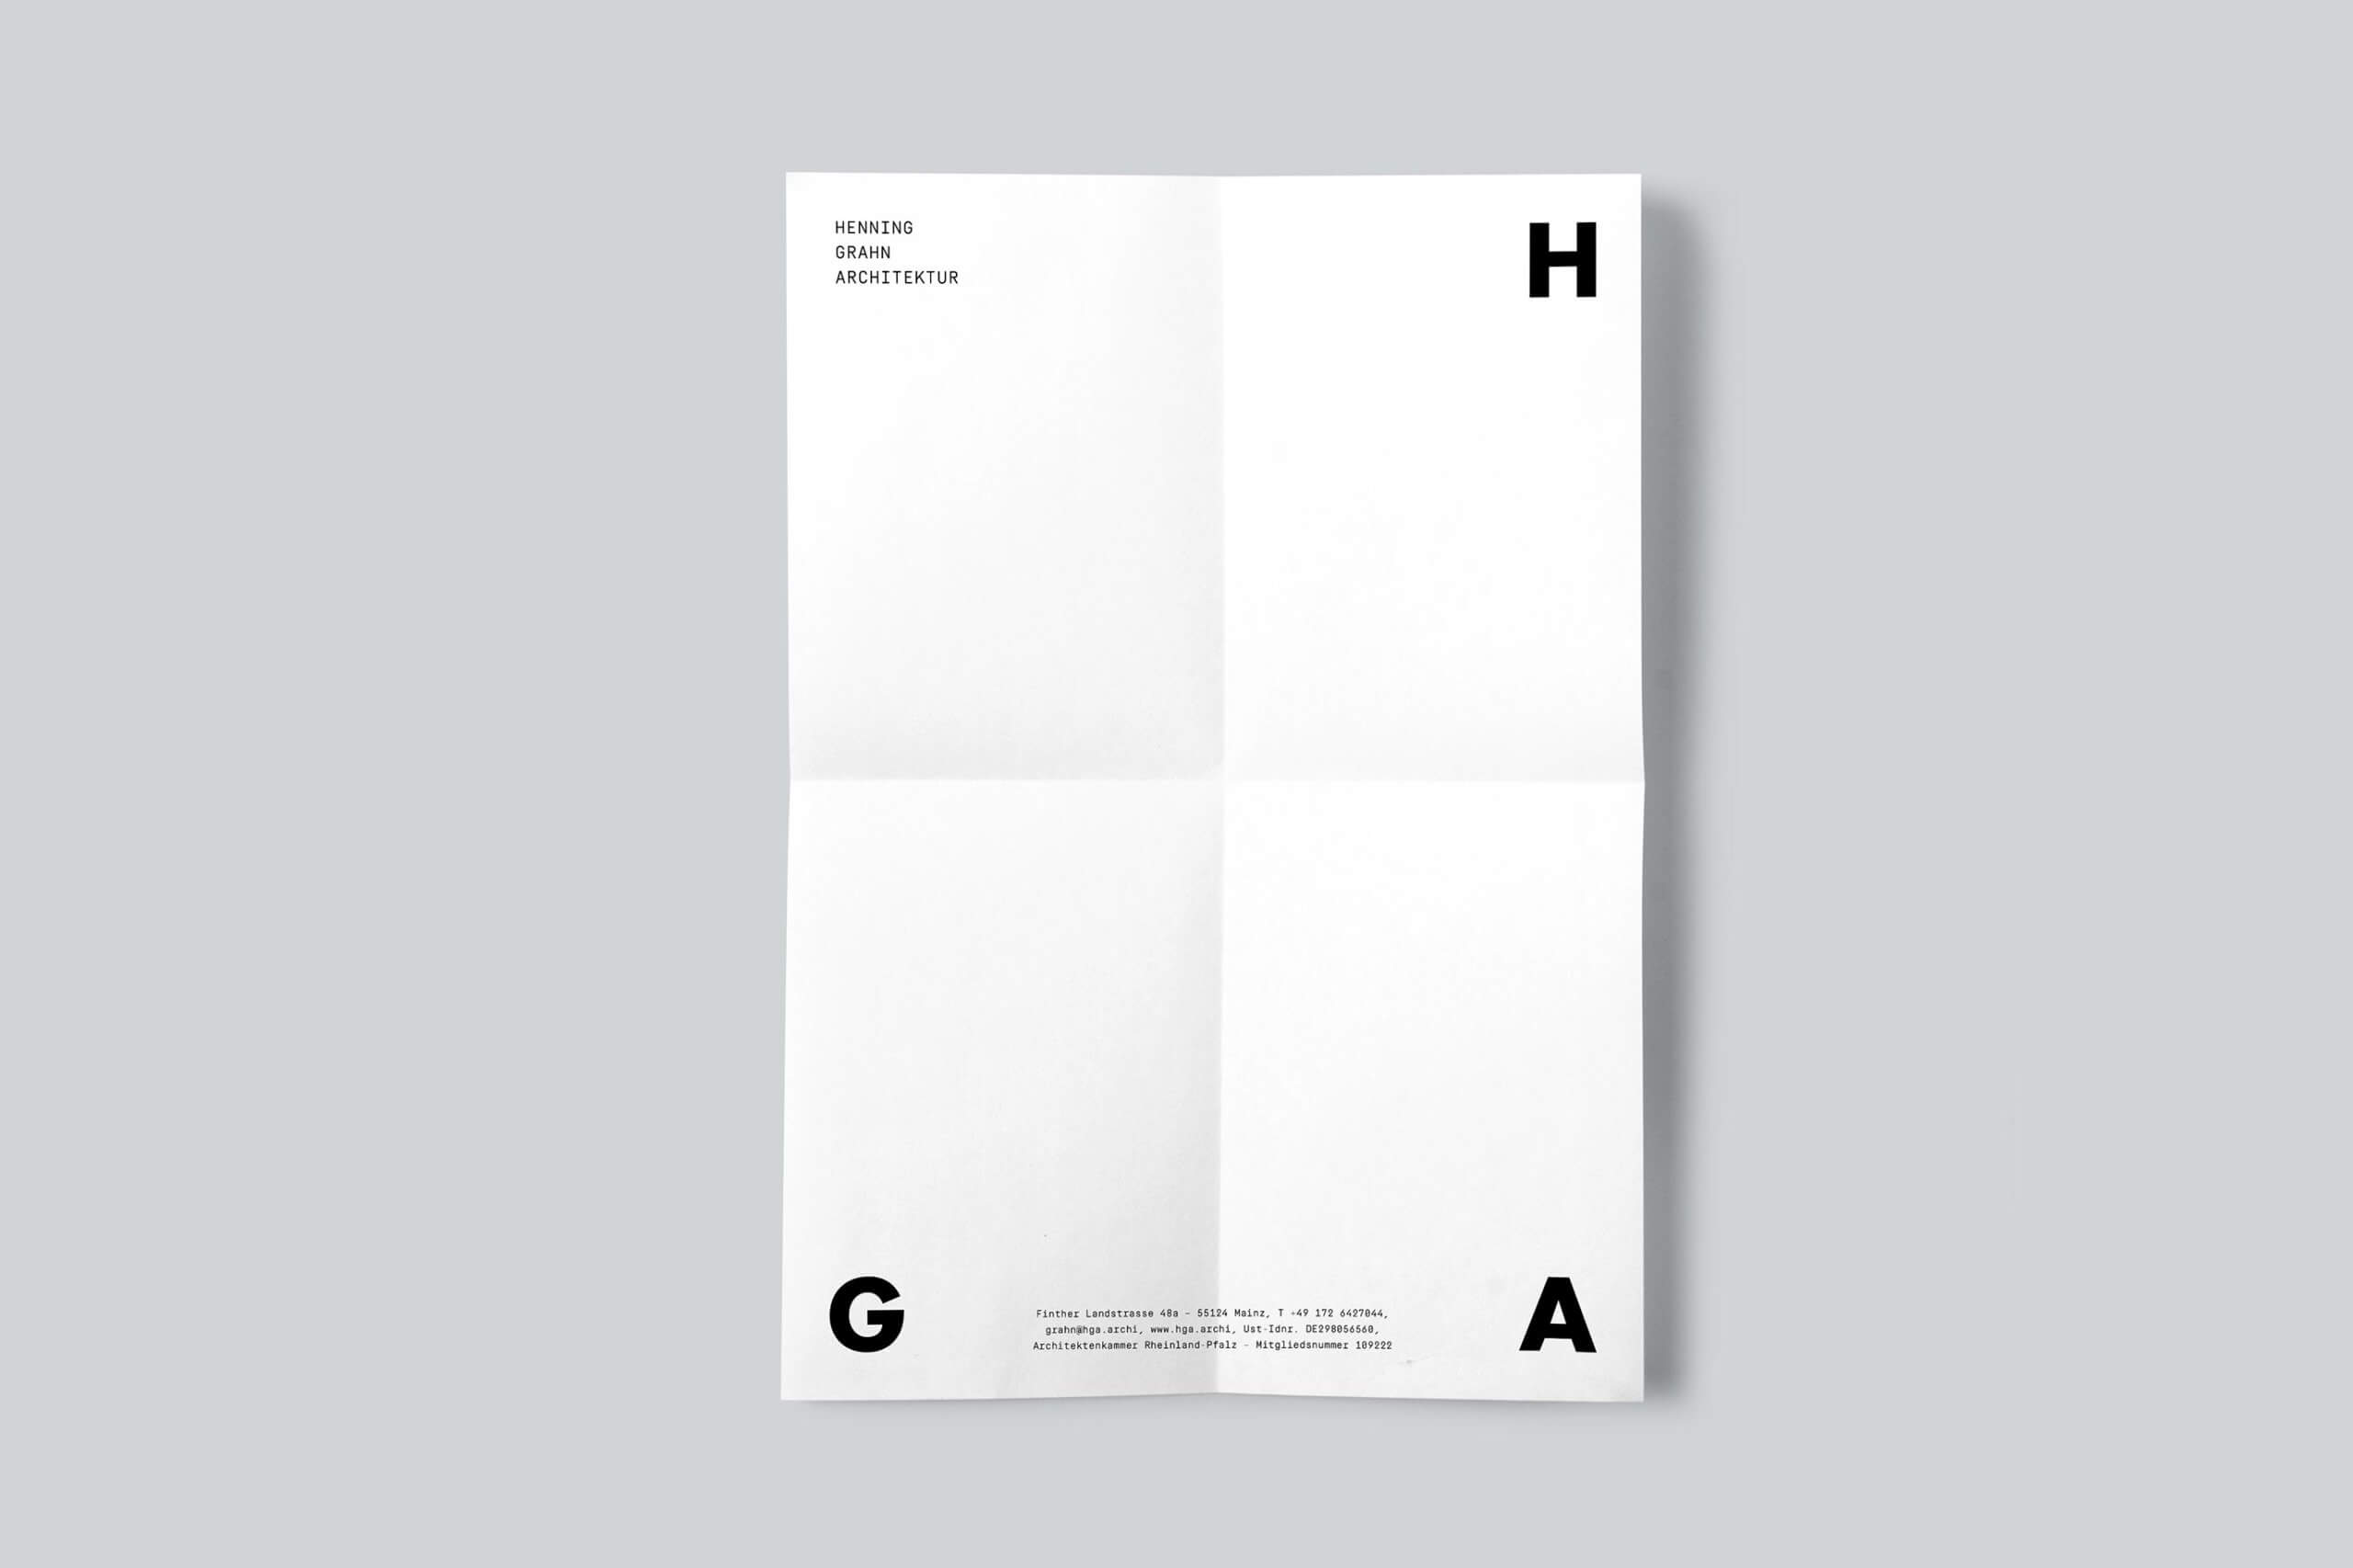 HGA - Henning Grahn Architektur Branding